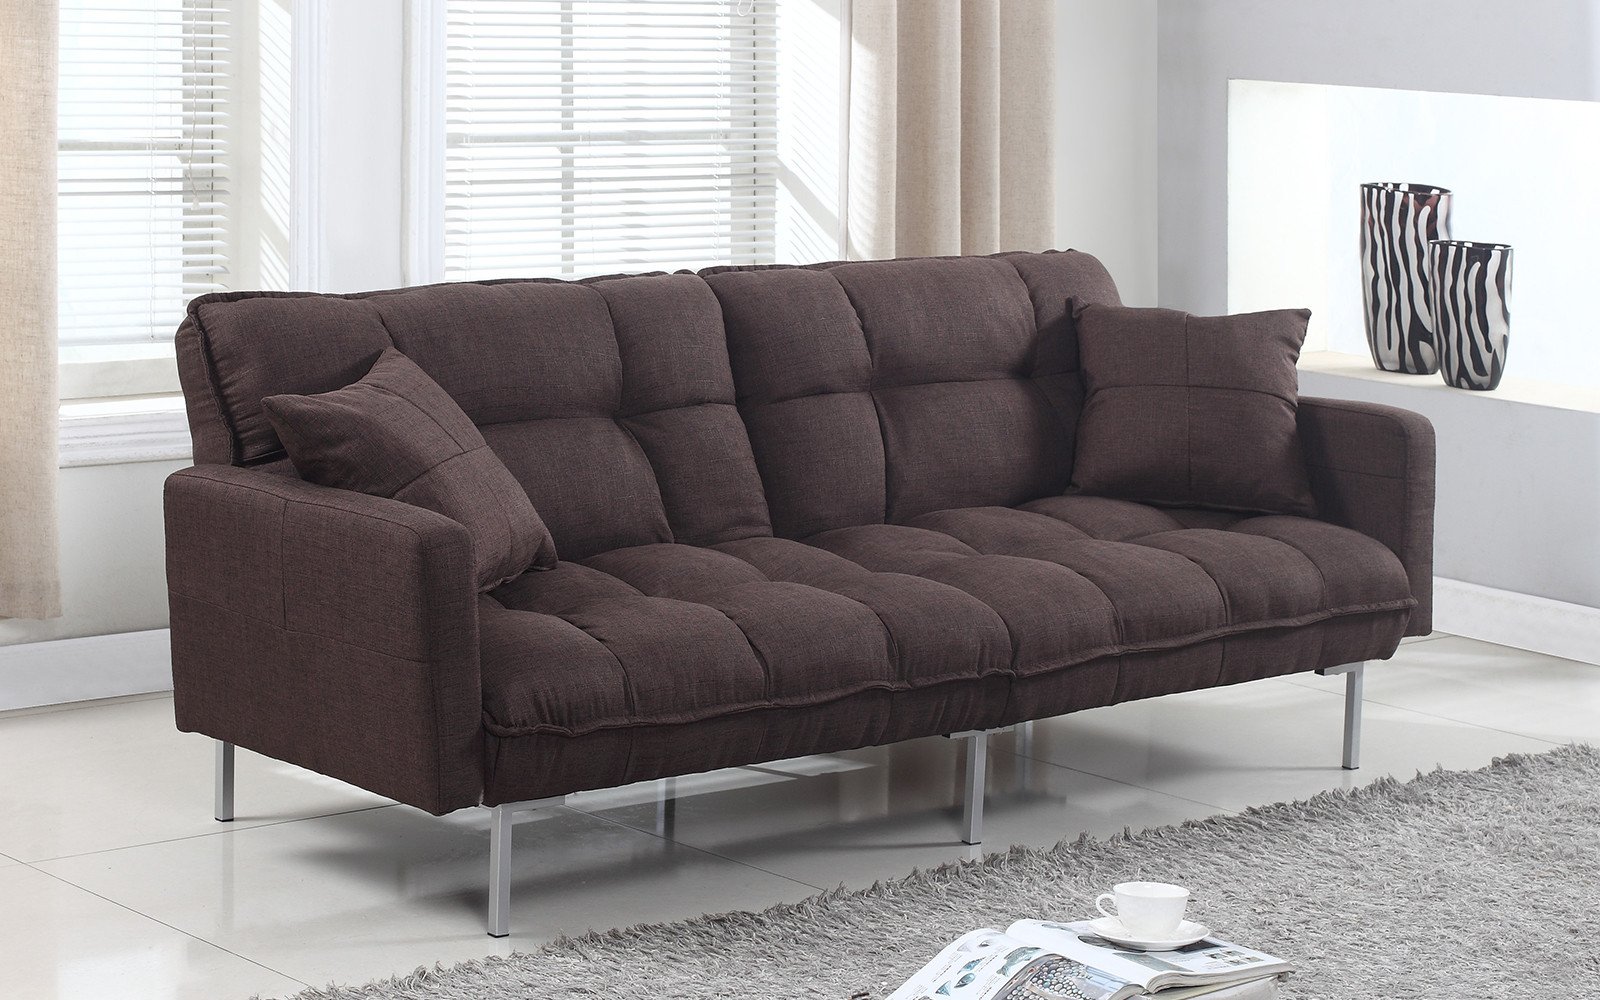 Futon 5 Tips to Modernize Your Living Room with a Sofa - 1